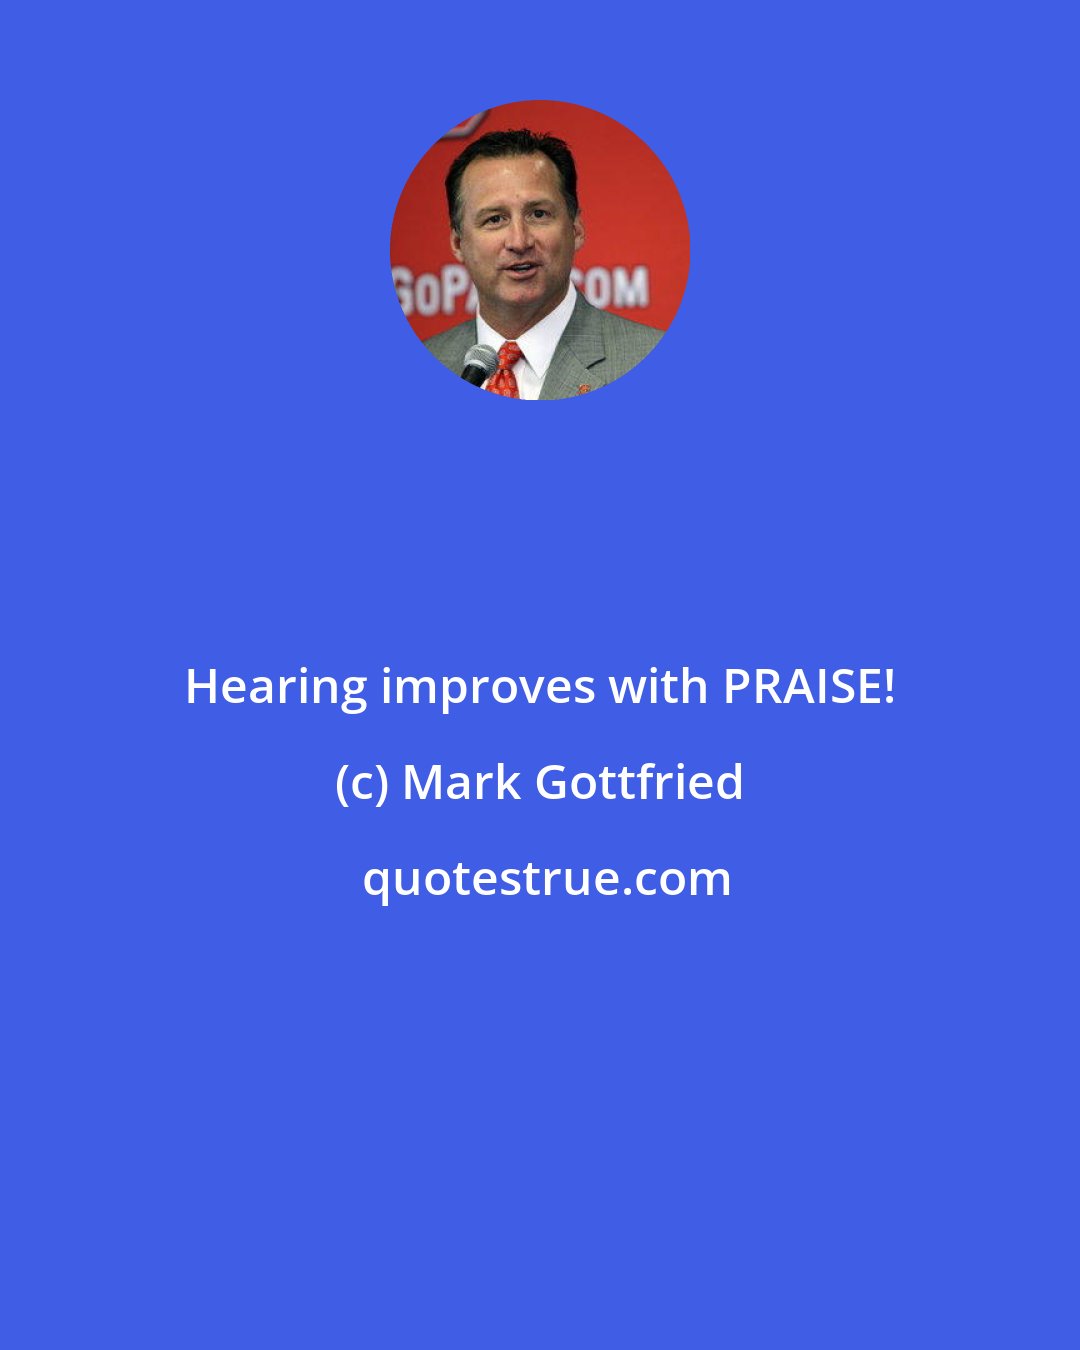 Mark Gottfried: Hearing improves with PRAISE!